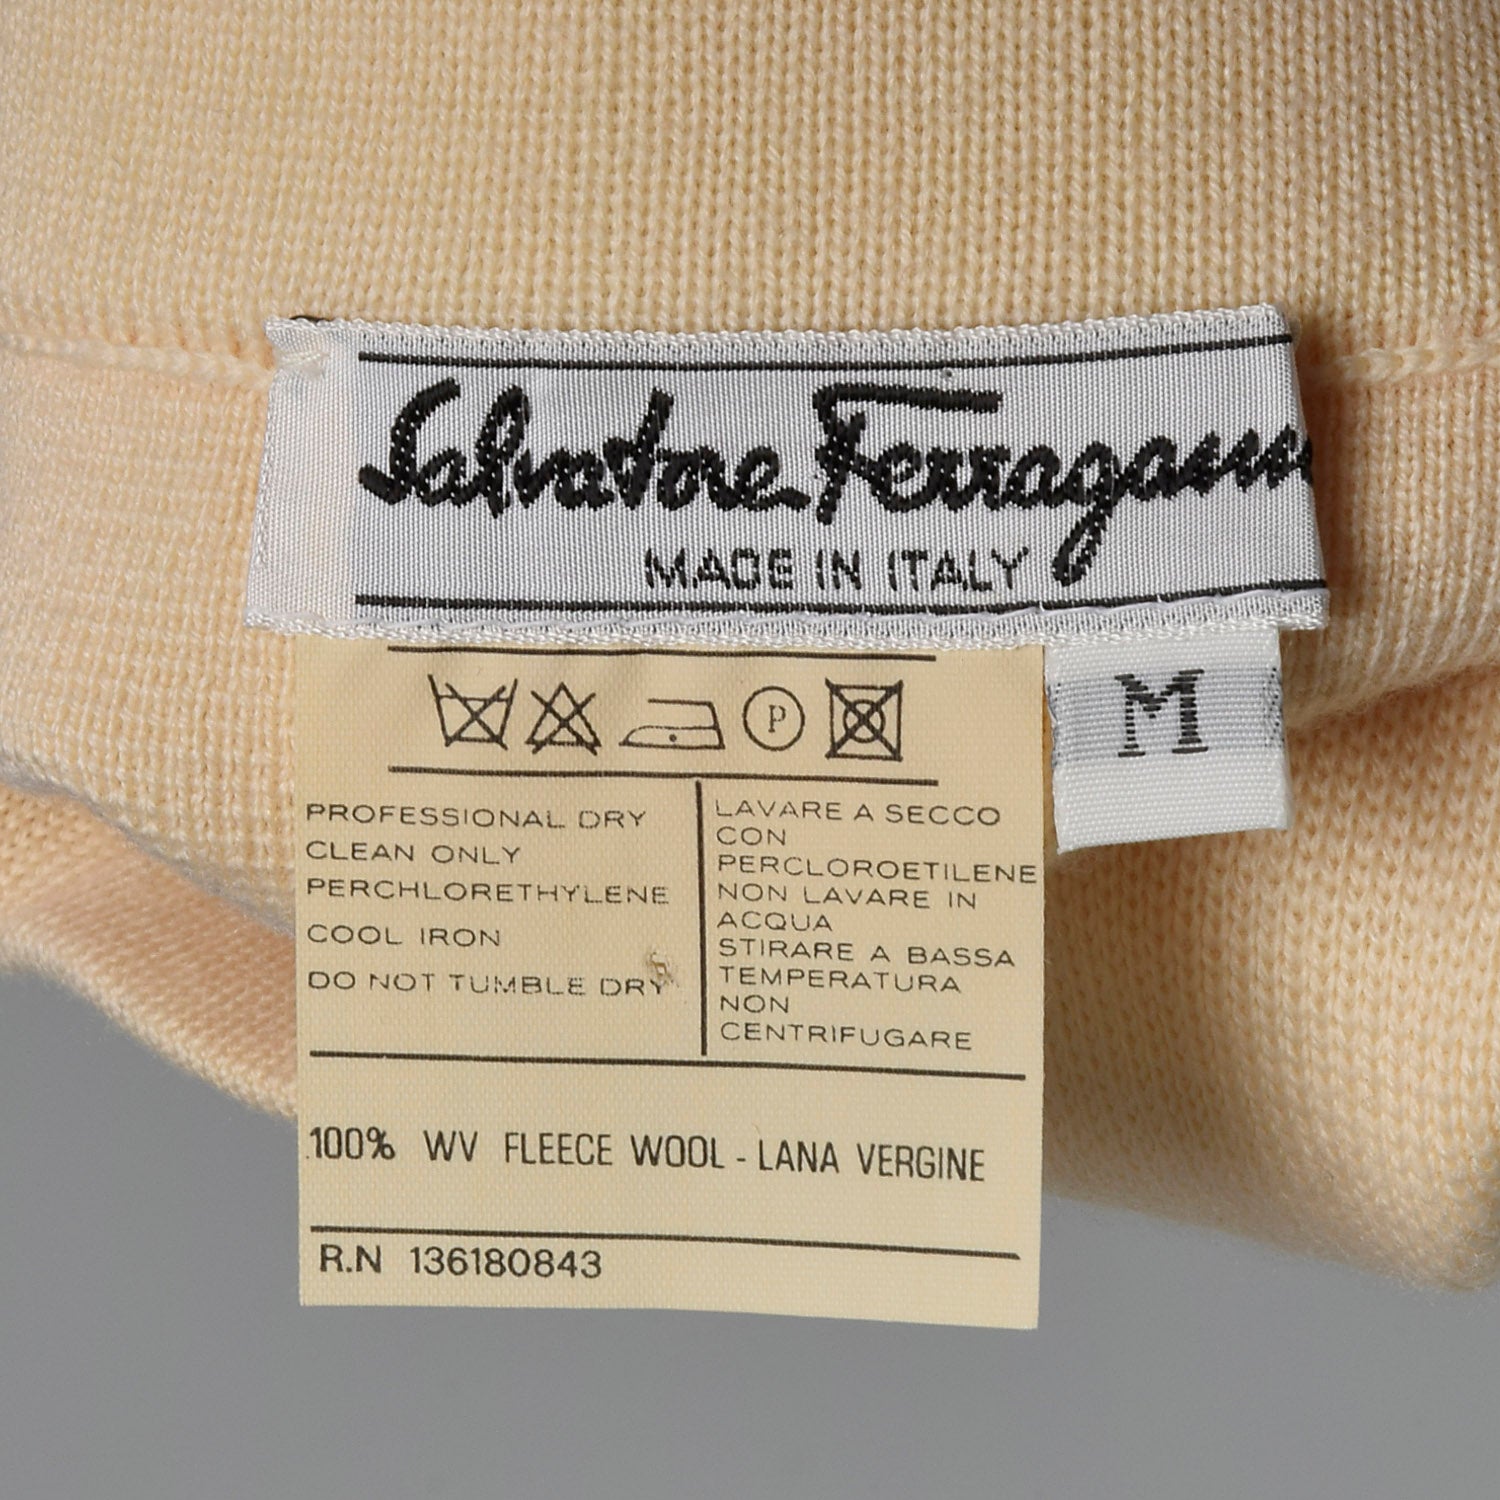 Salvatore Ferragamo 1990s Cream Knit Skirt